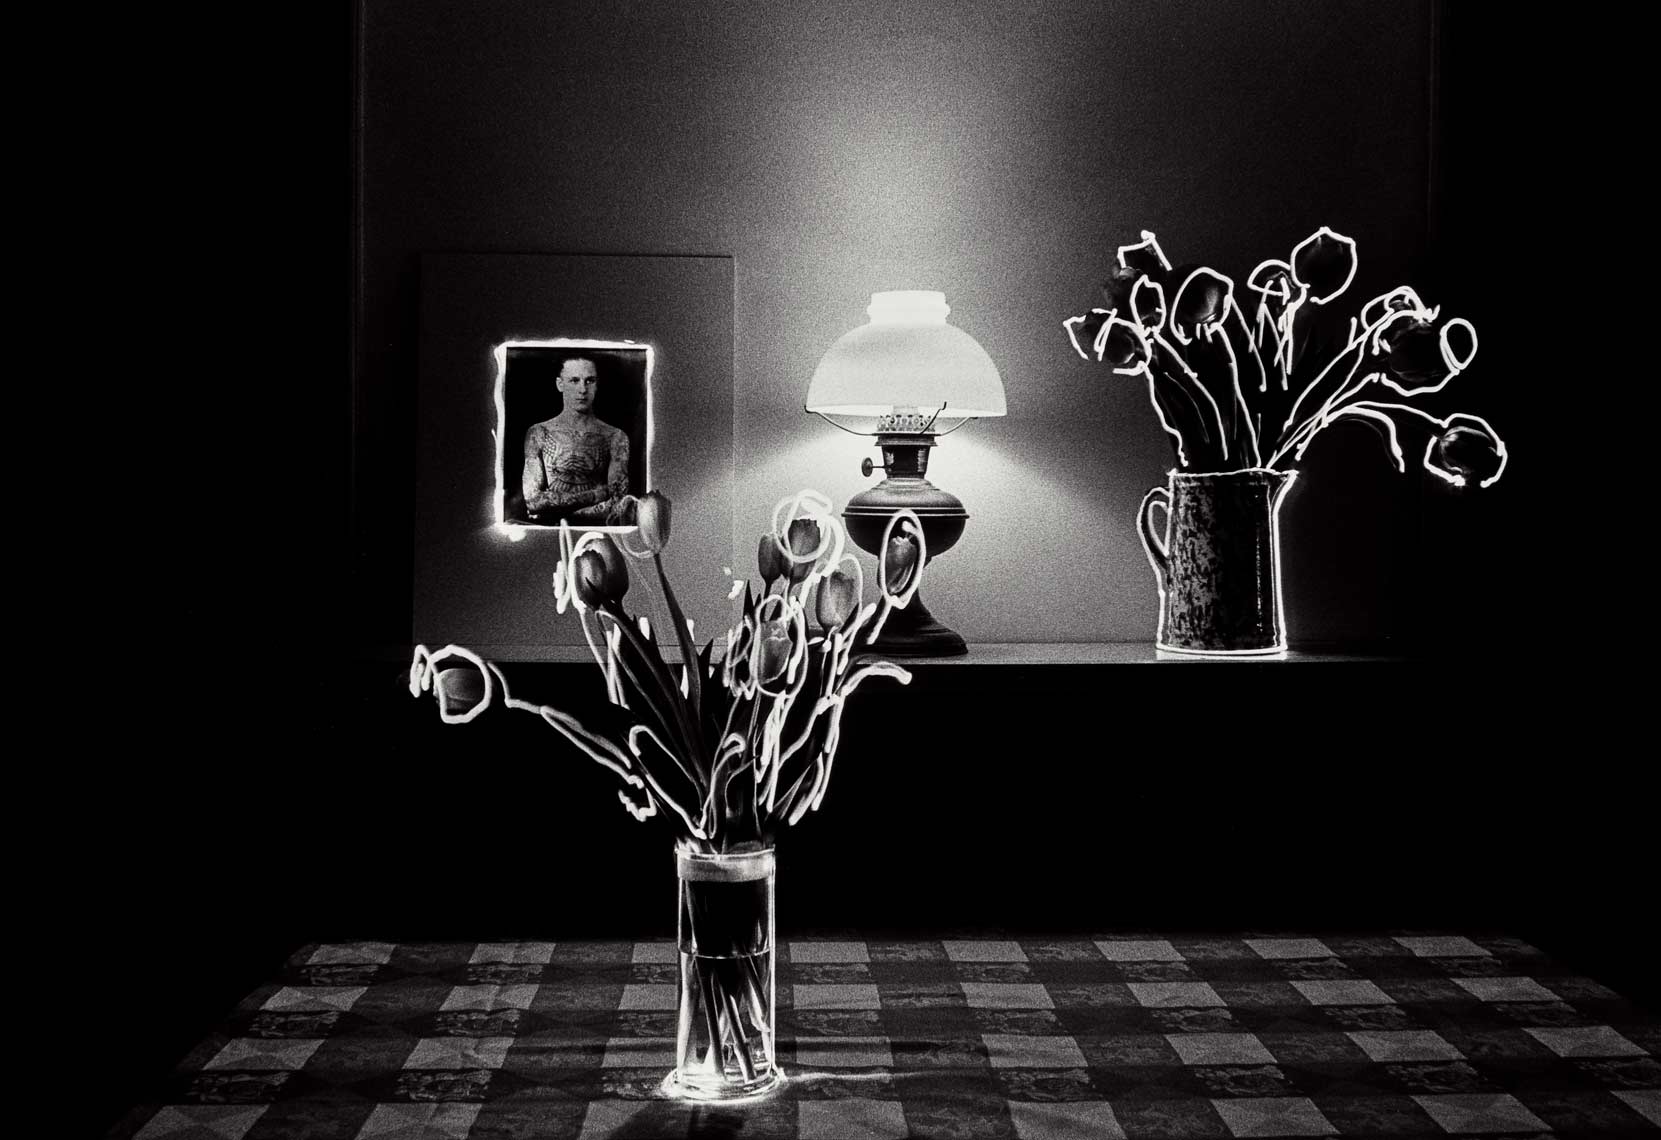 David Lebe; Checked Cloth, 1982, light drawing, black and white photograph